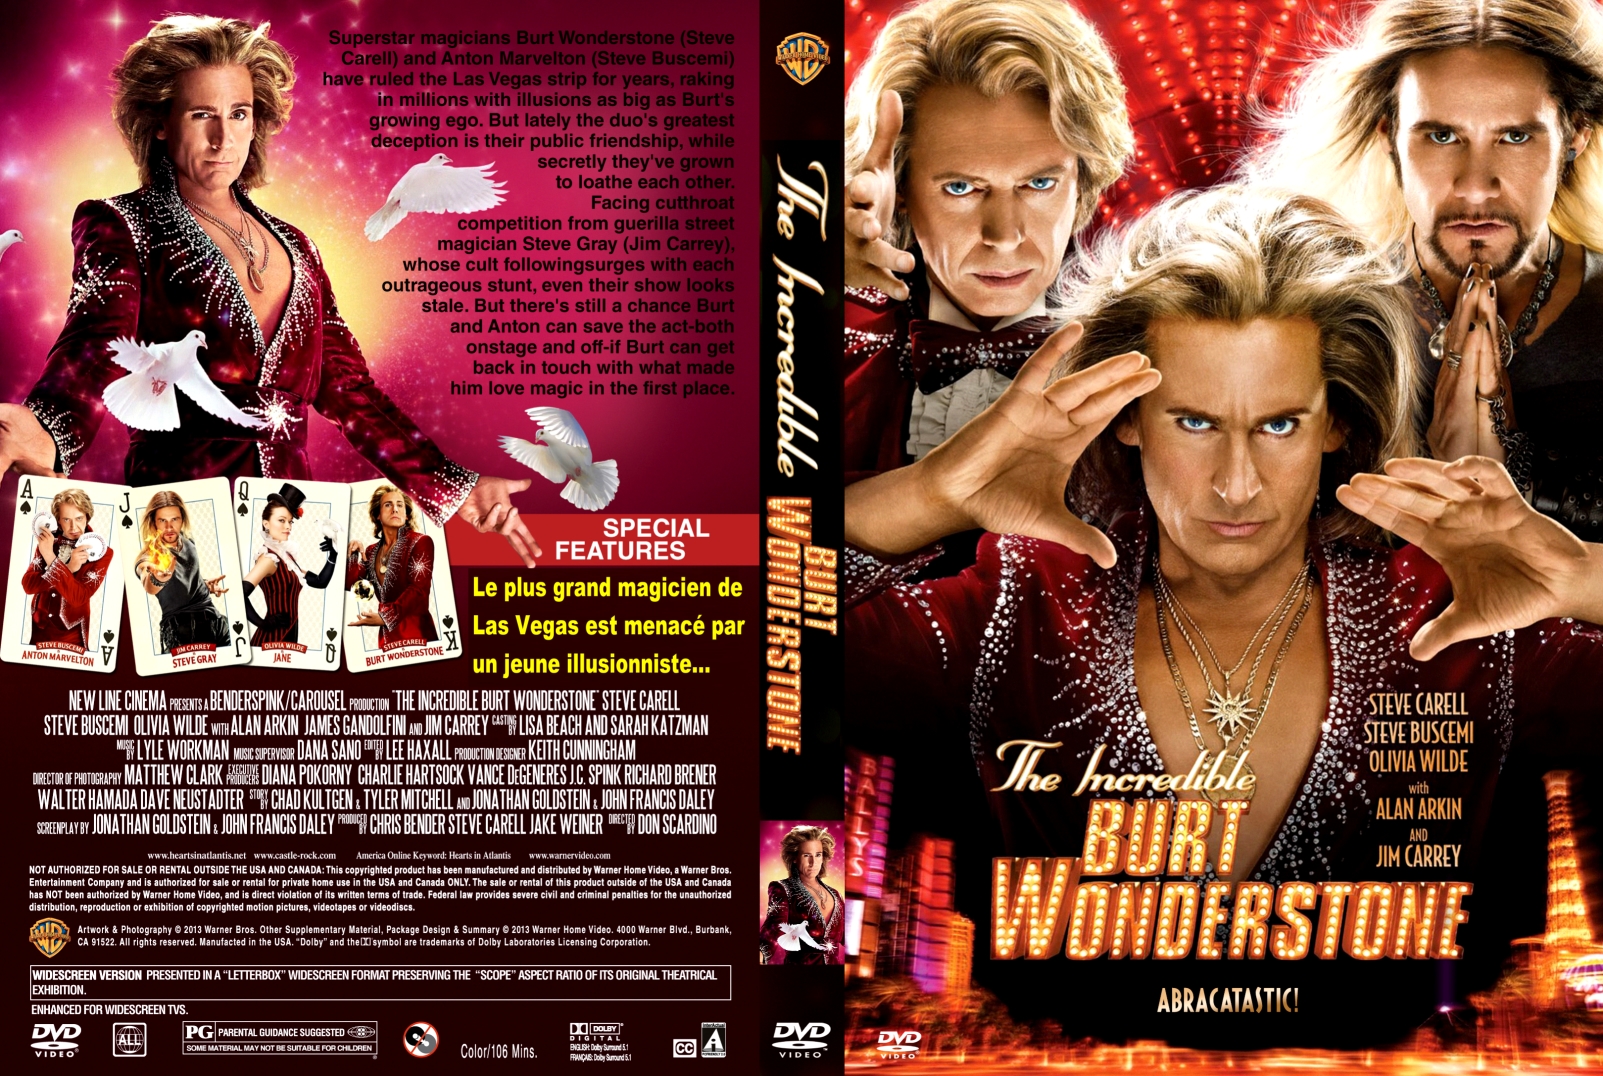 Jaquette DVD The Incredible Burt Wonderstone custom